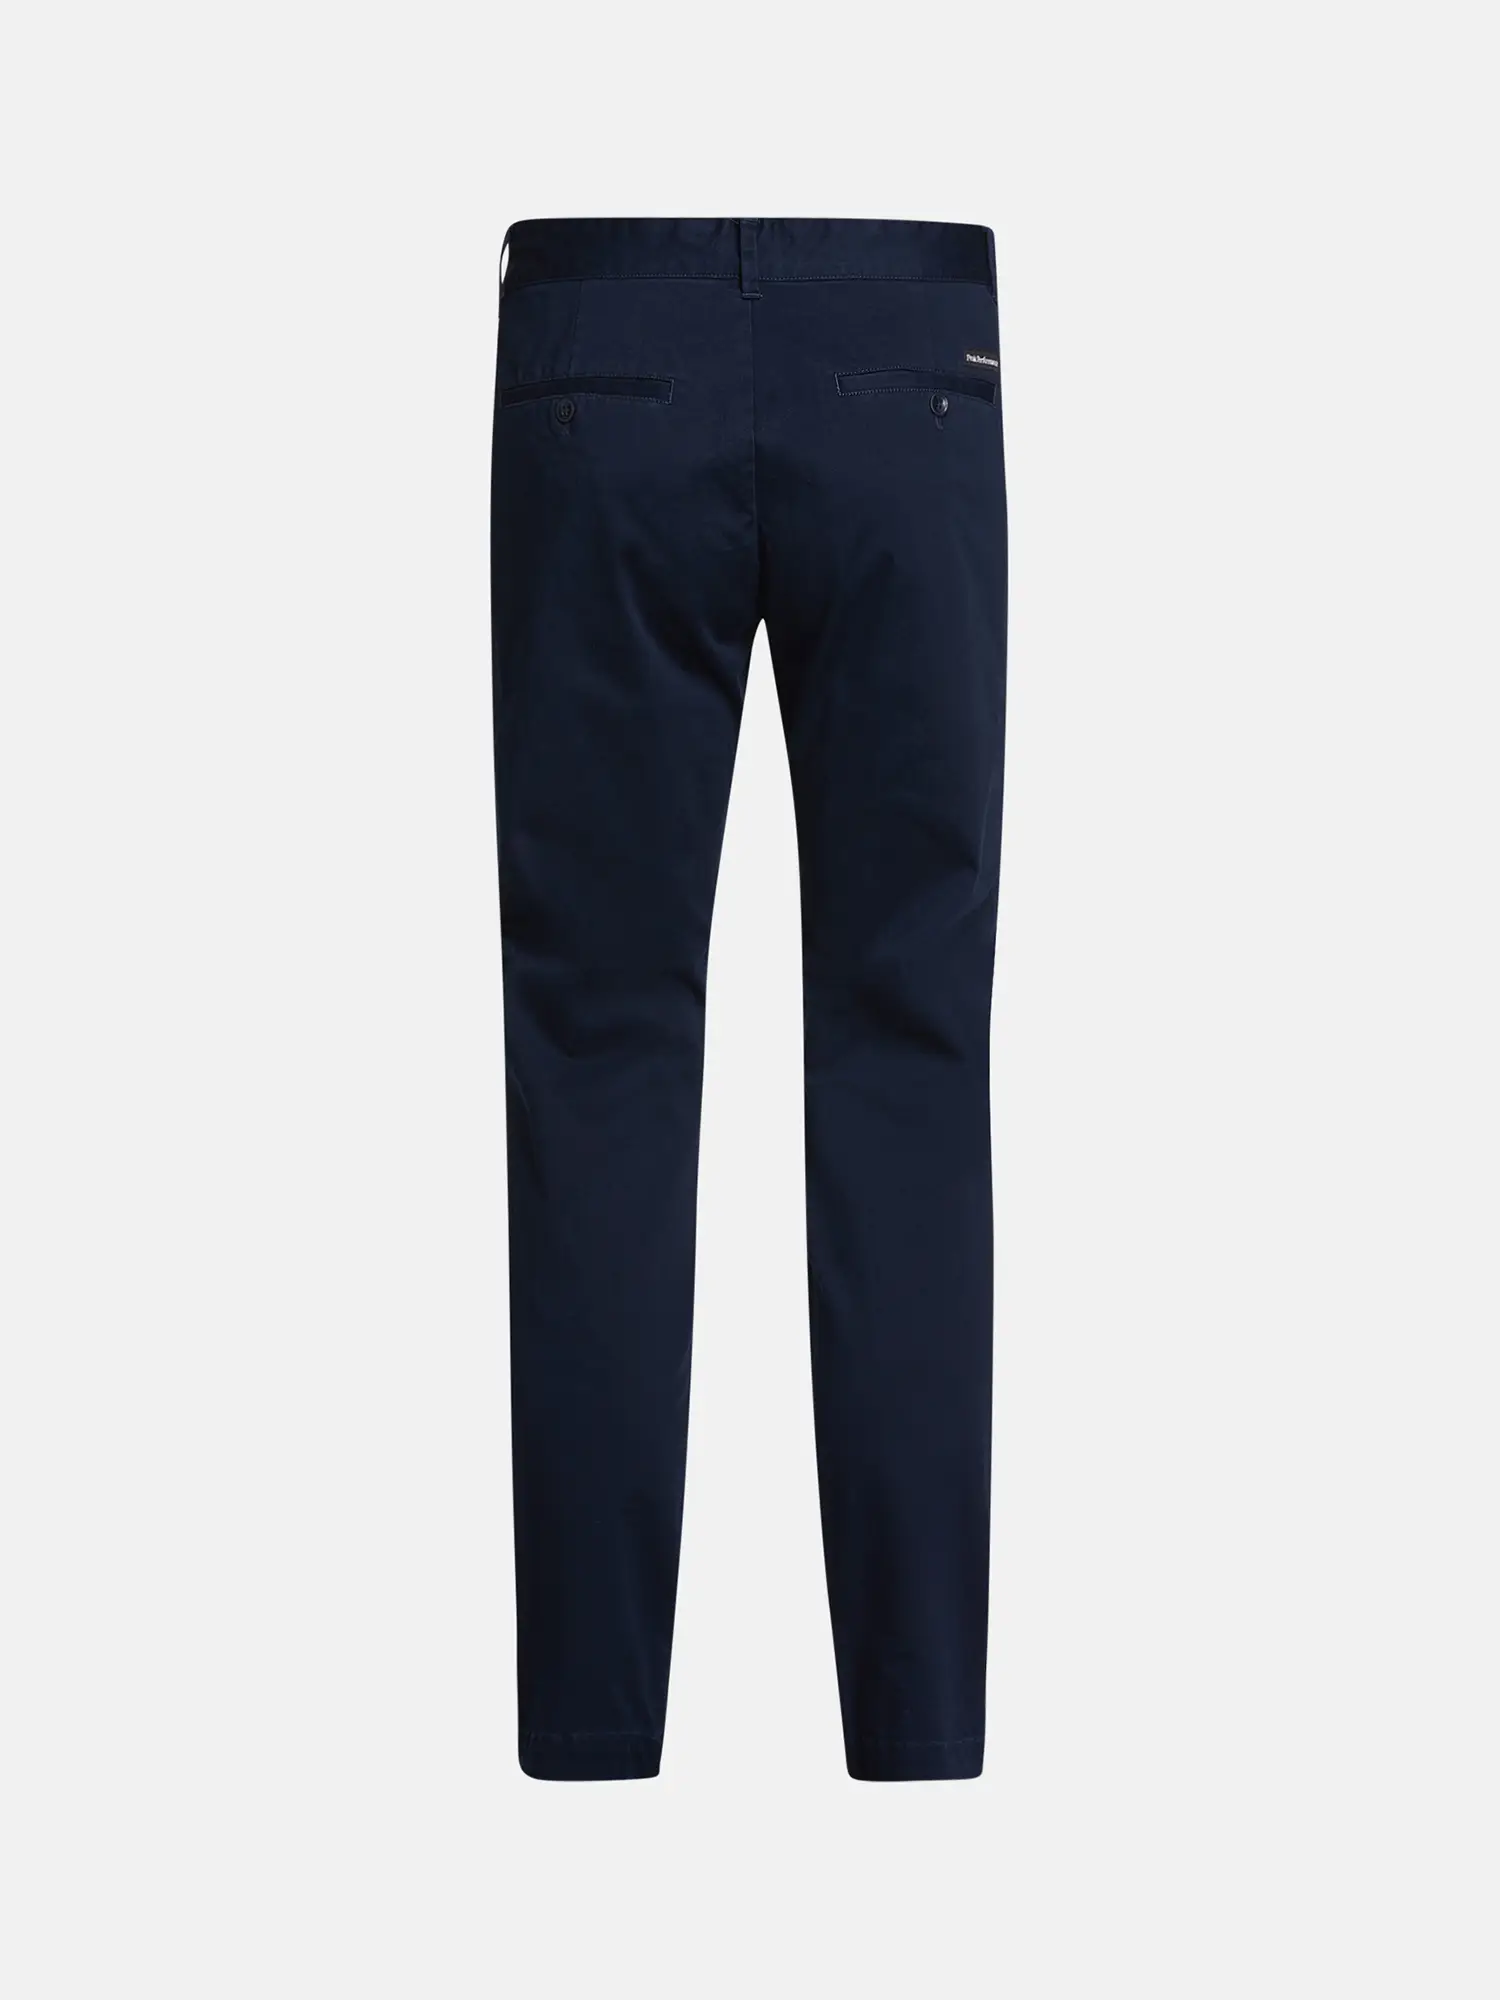 MEN FASHION Trousers Straight discount 68% Navy Blue 40                  EU Mango Chino trouser 